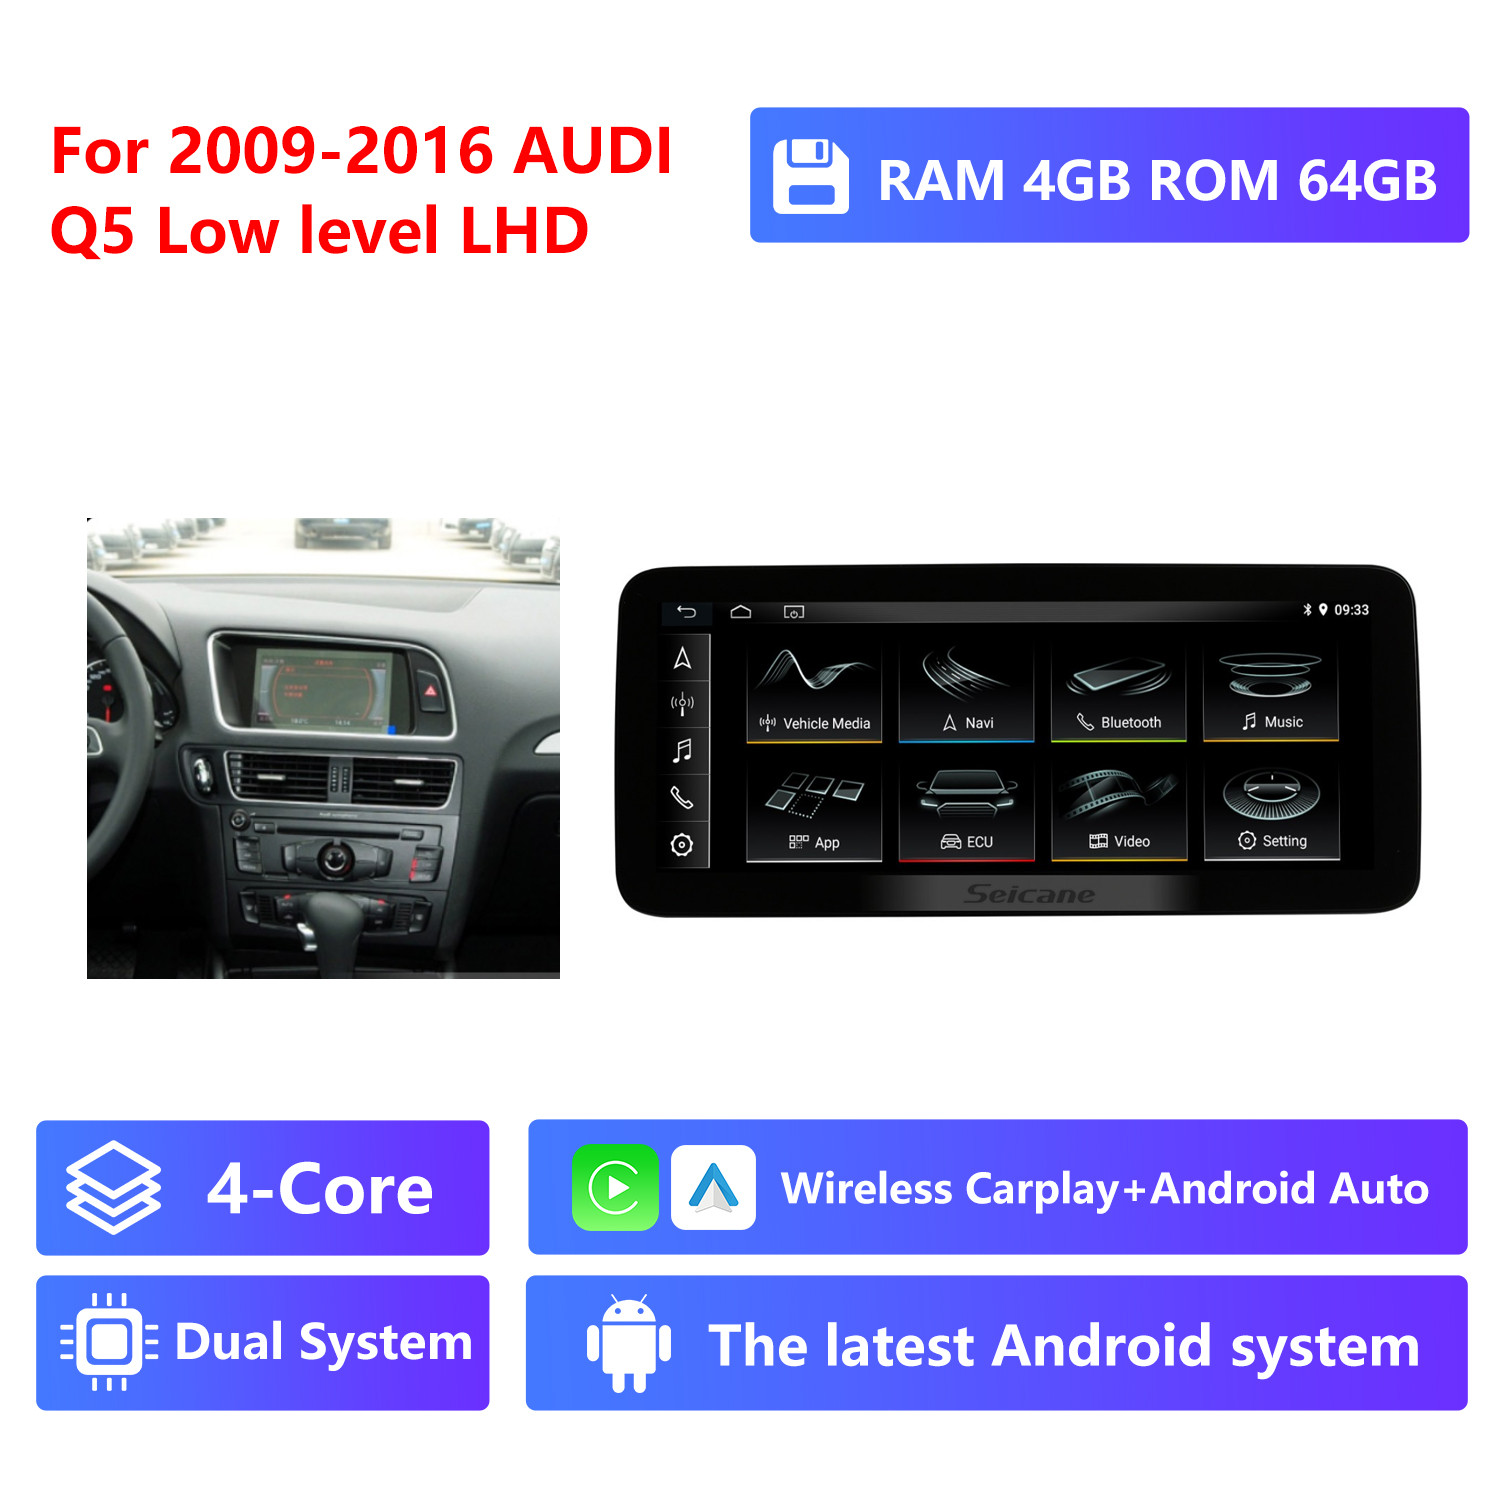 4-Core RAM 4G ROM 64G,2008-2016,Low version,LHD